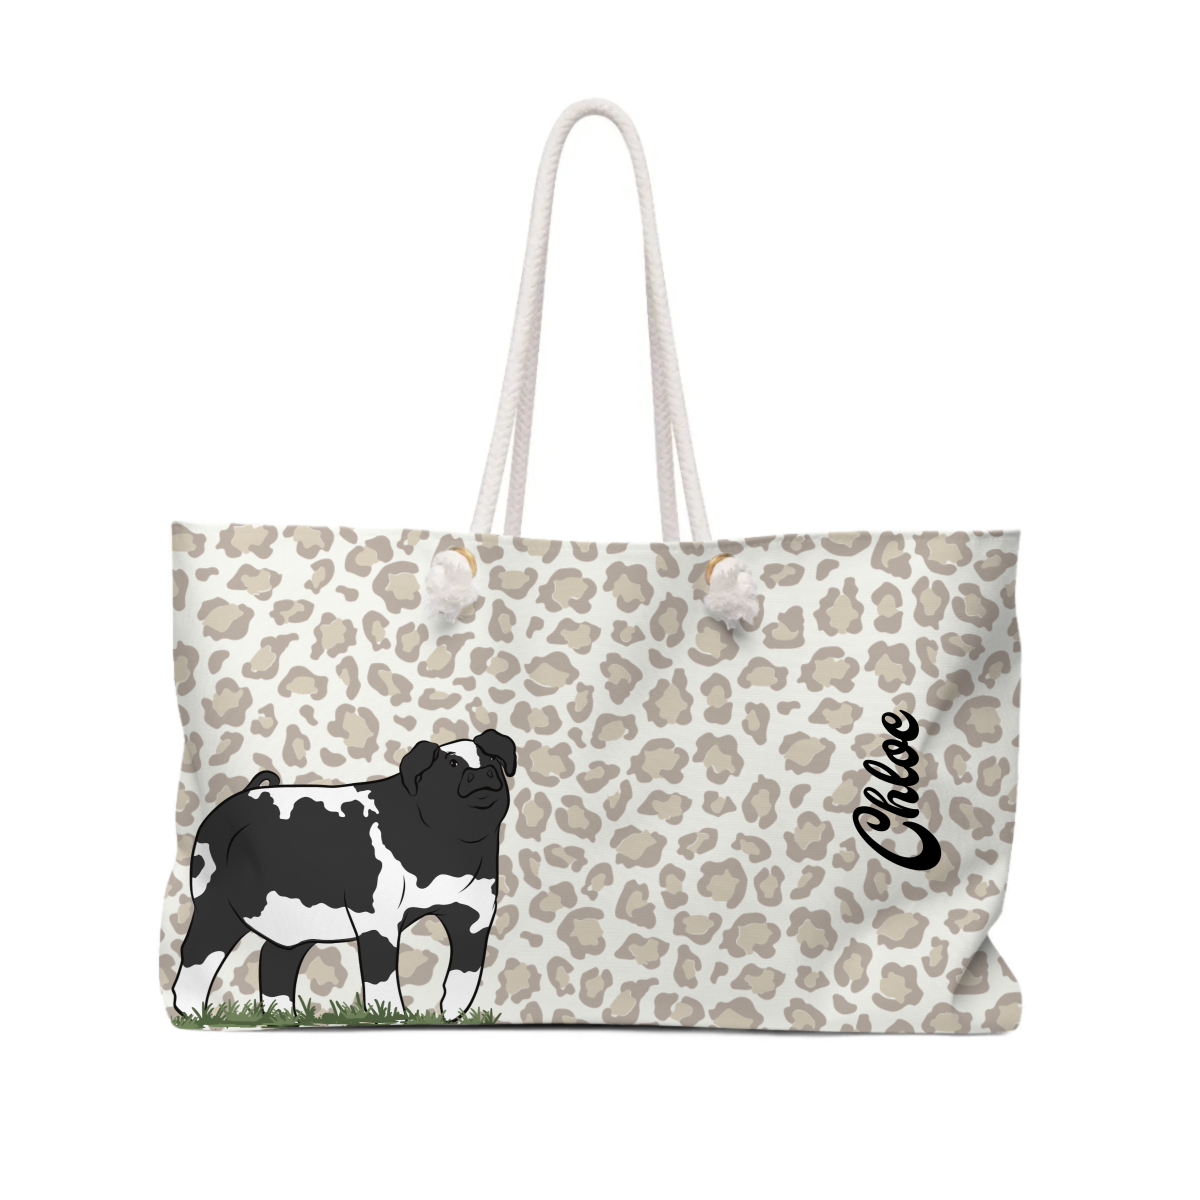 Personalized-Livestock-Tote Bag - Cheetah Pattern